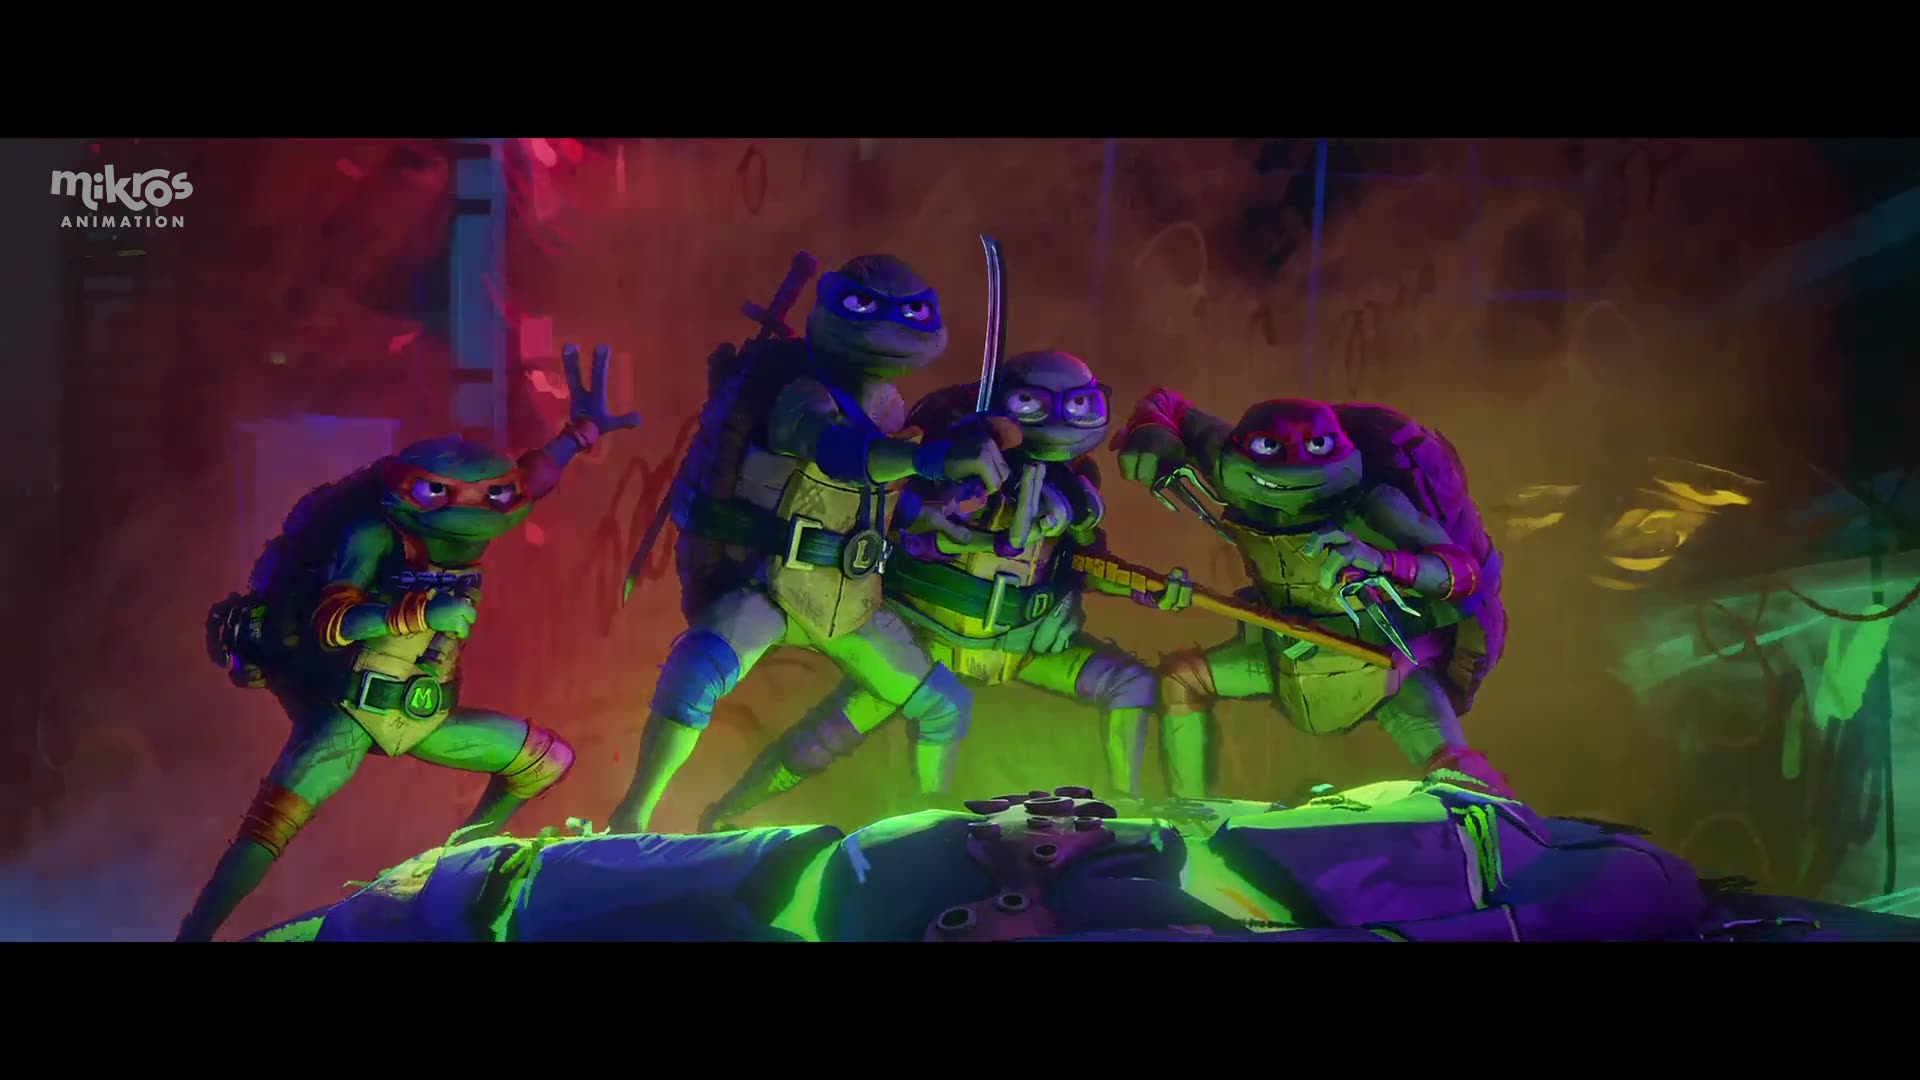 Teenage Mutant Ninja Turtles: Mutant Mayhem' Review - The New York